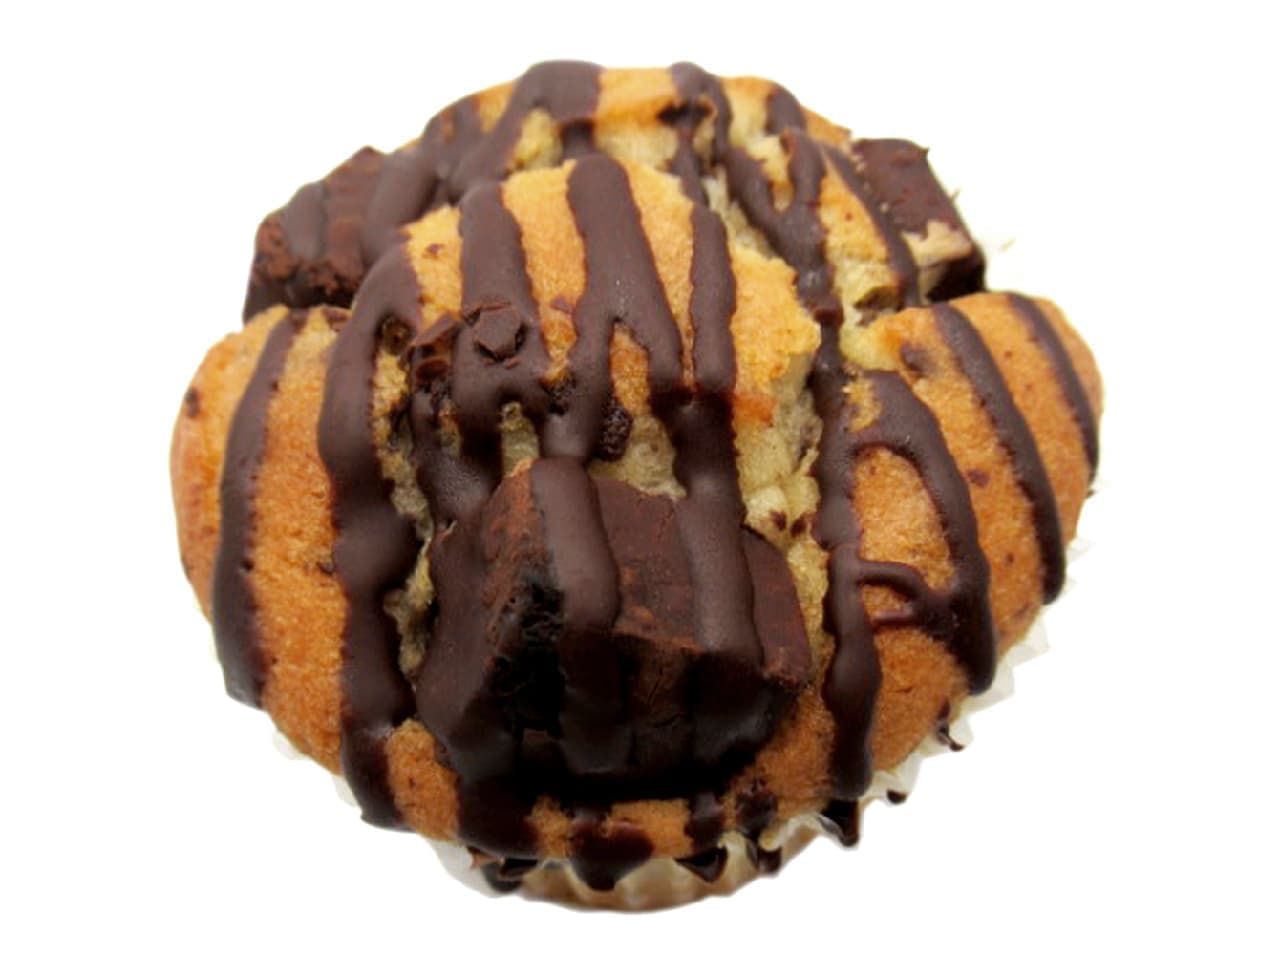 7-Eleven "Choco Muffin